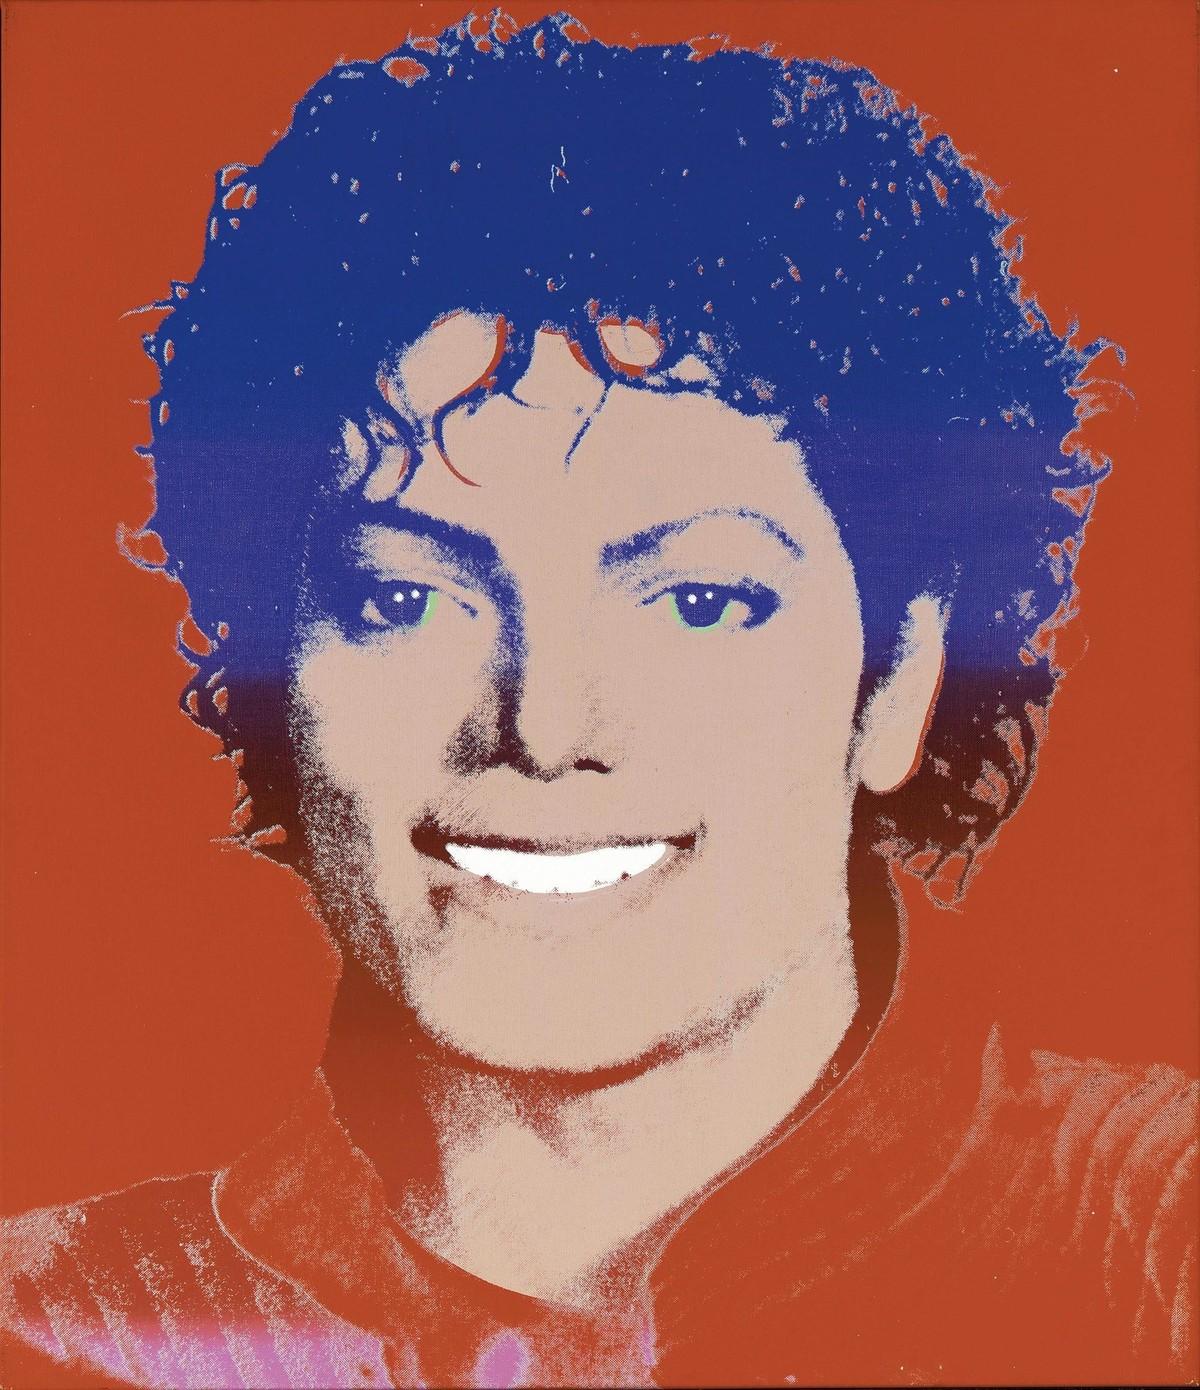 Michael Jackson by Andy Warhol